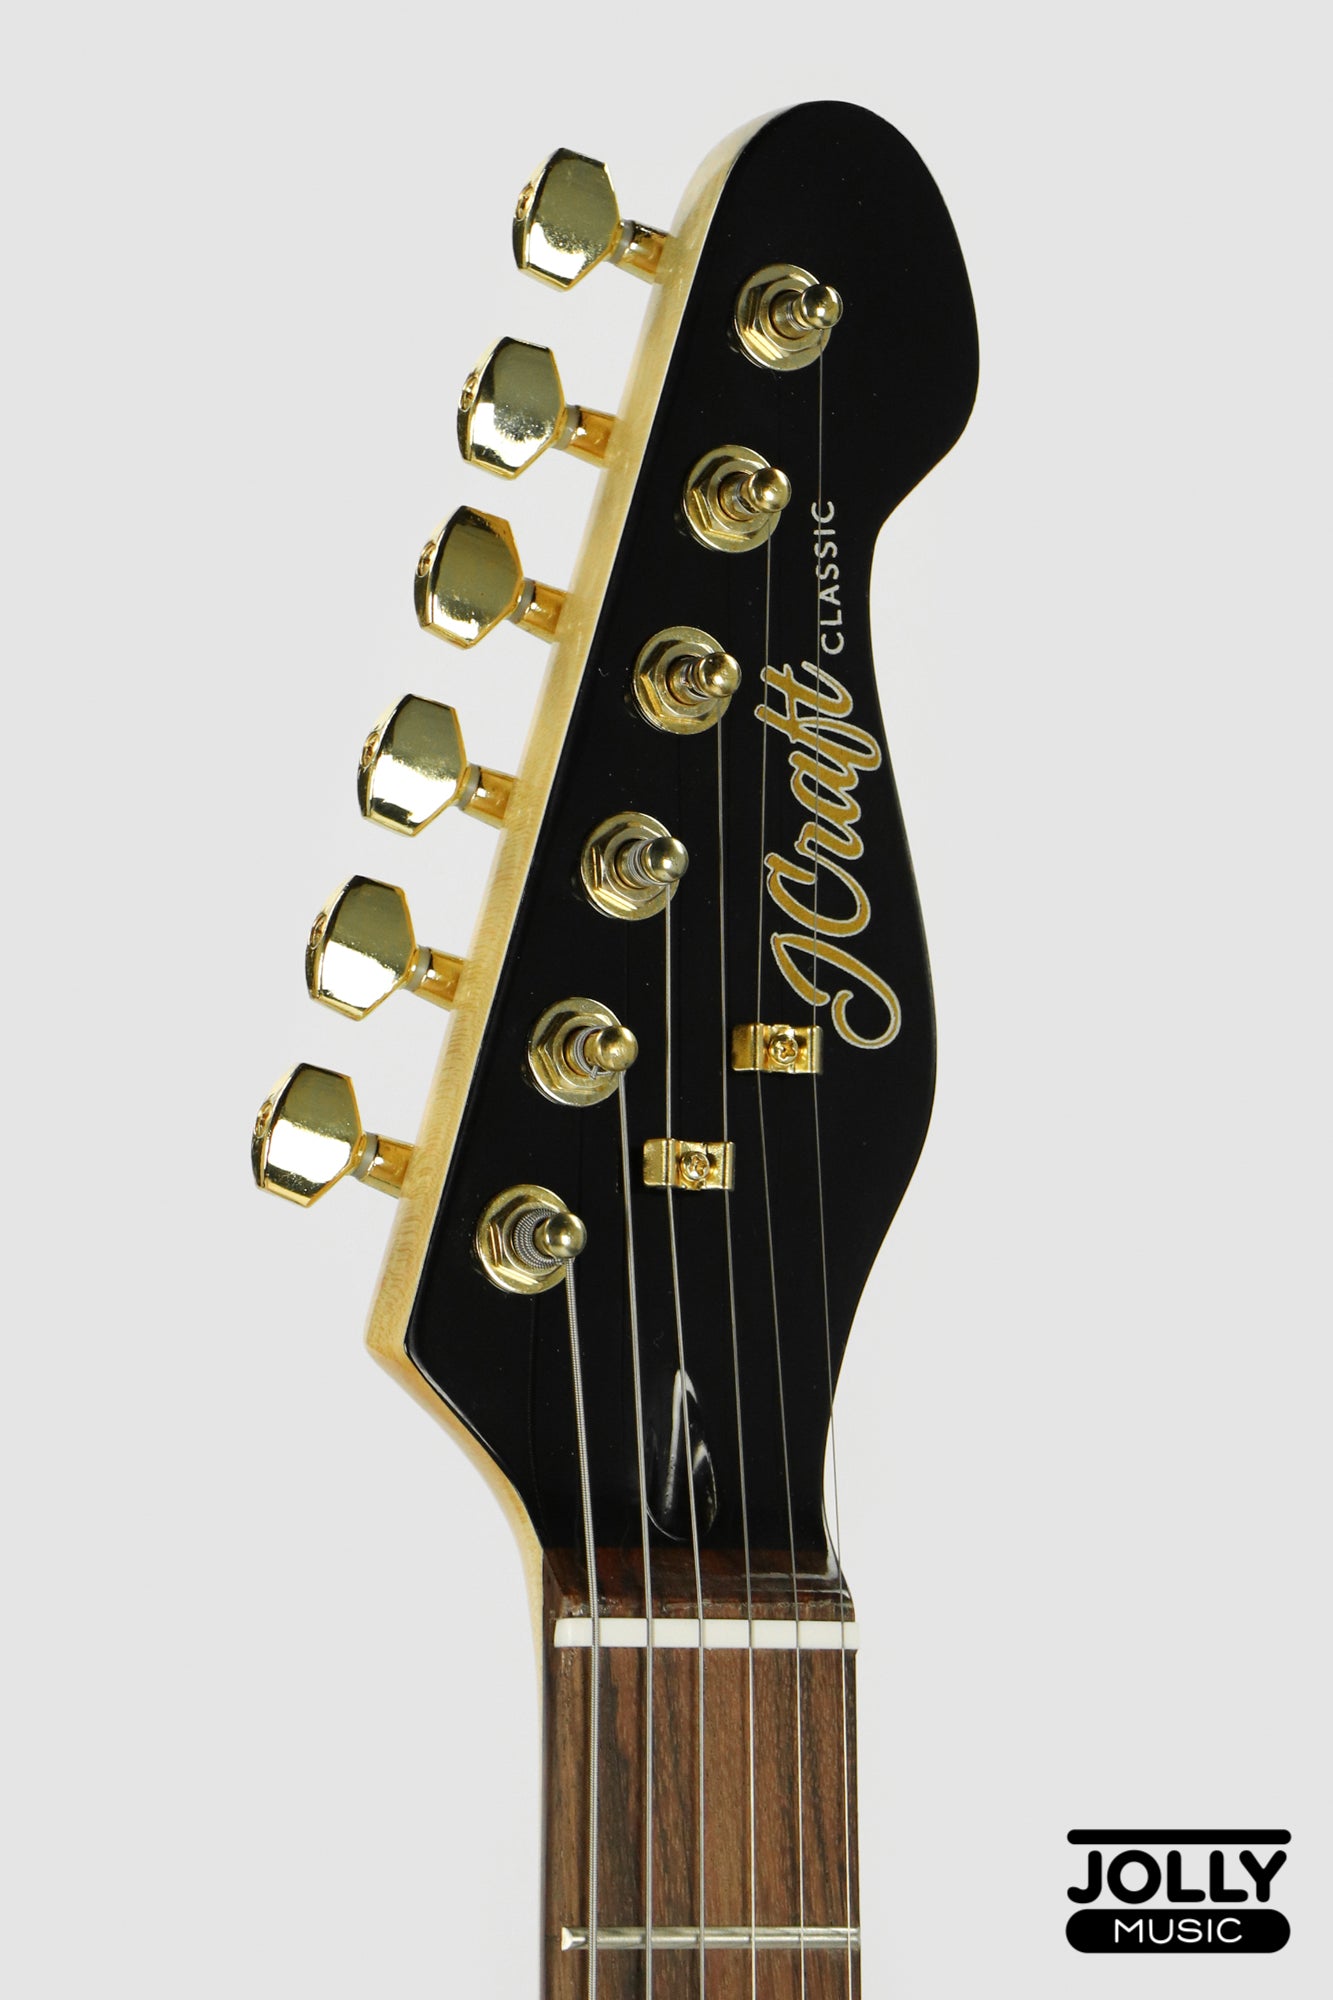 JCraft T-2 Ltd. T-Style Electric Guitar with Gigbag - Black